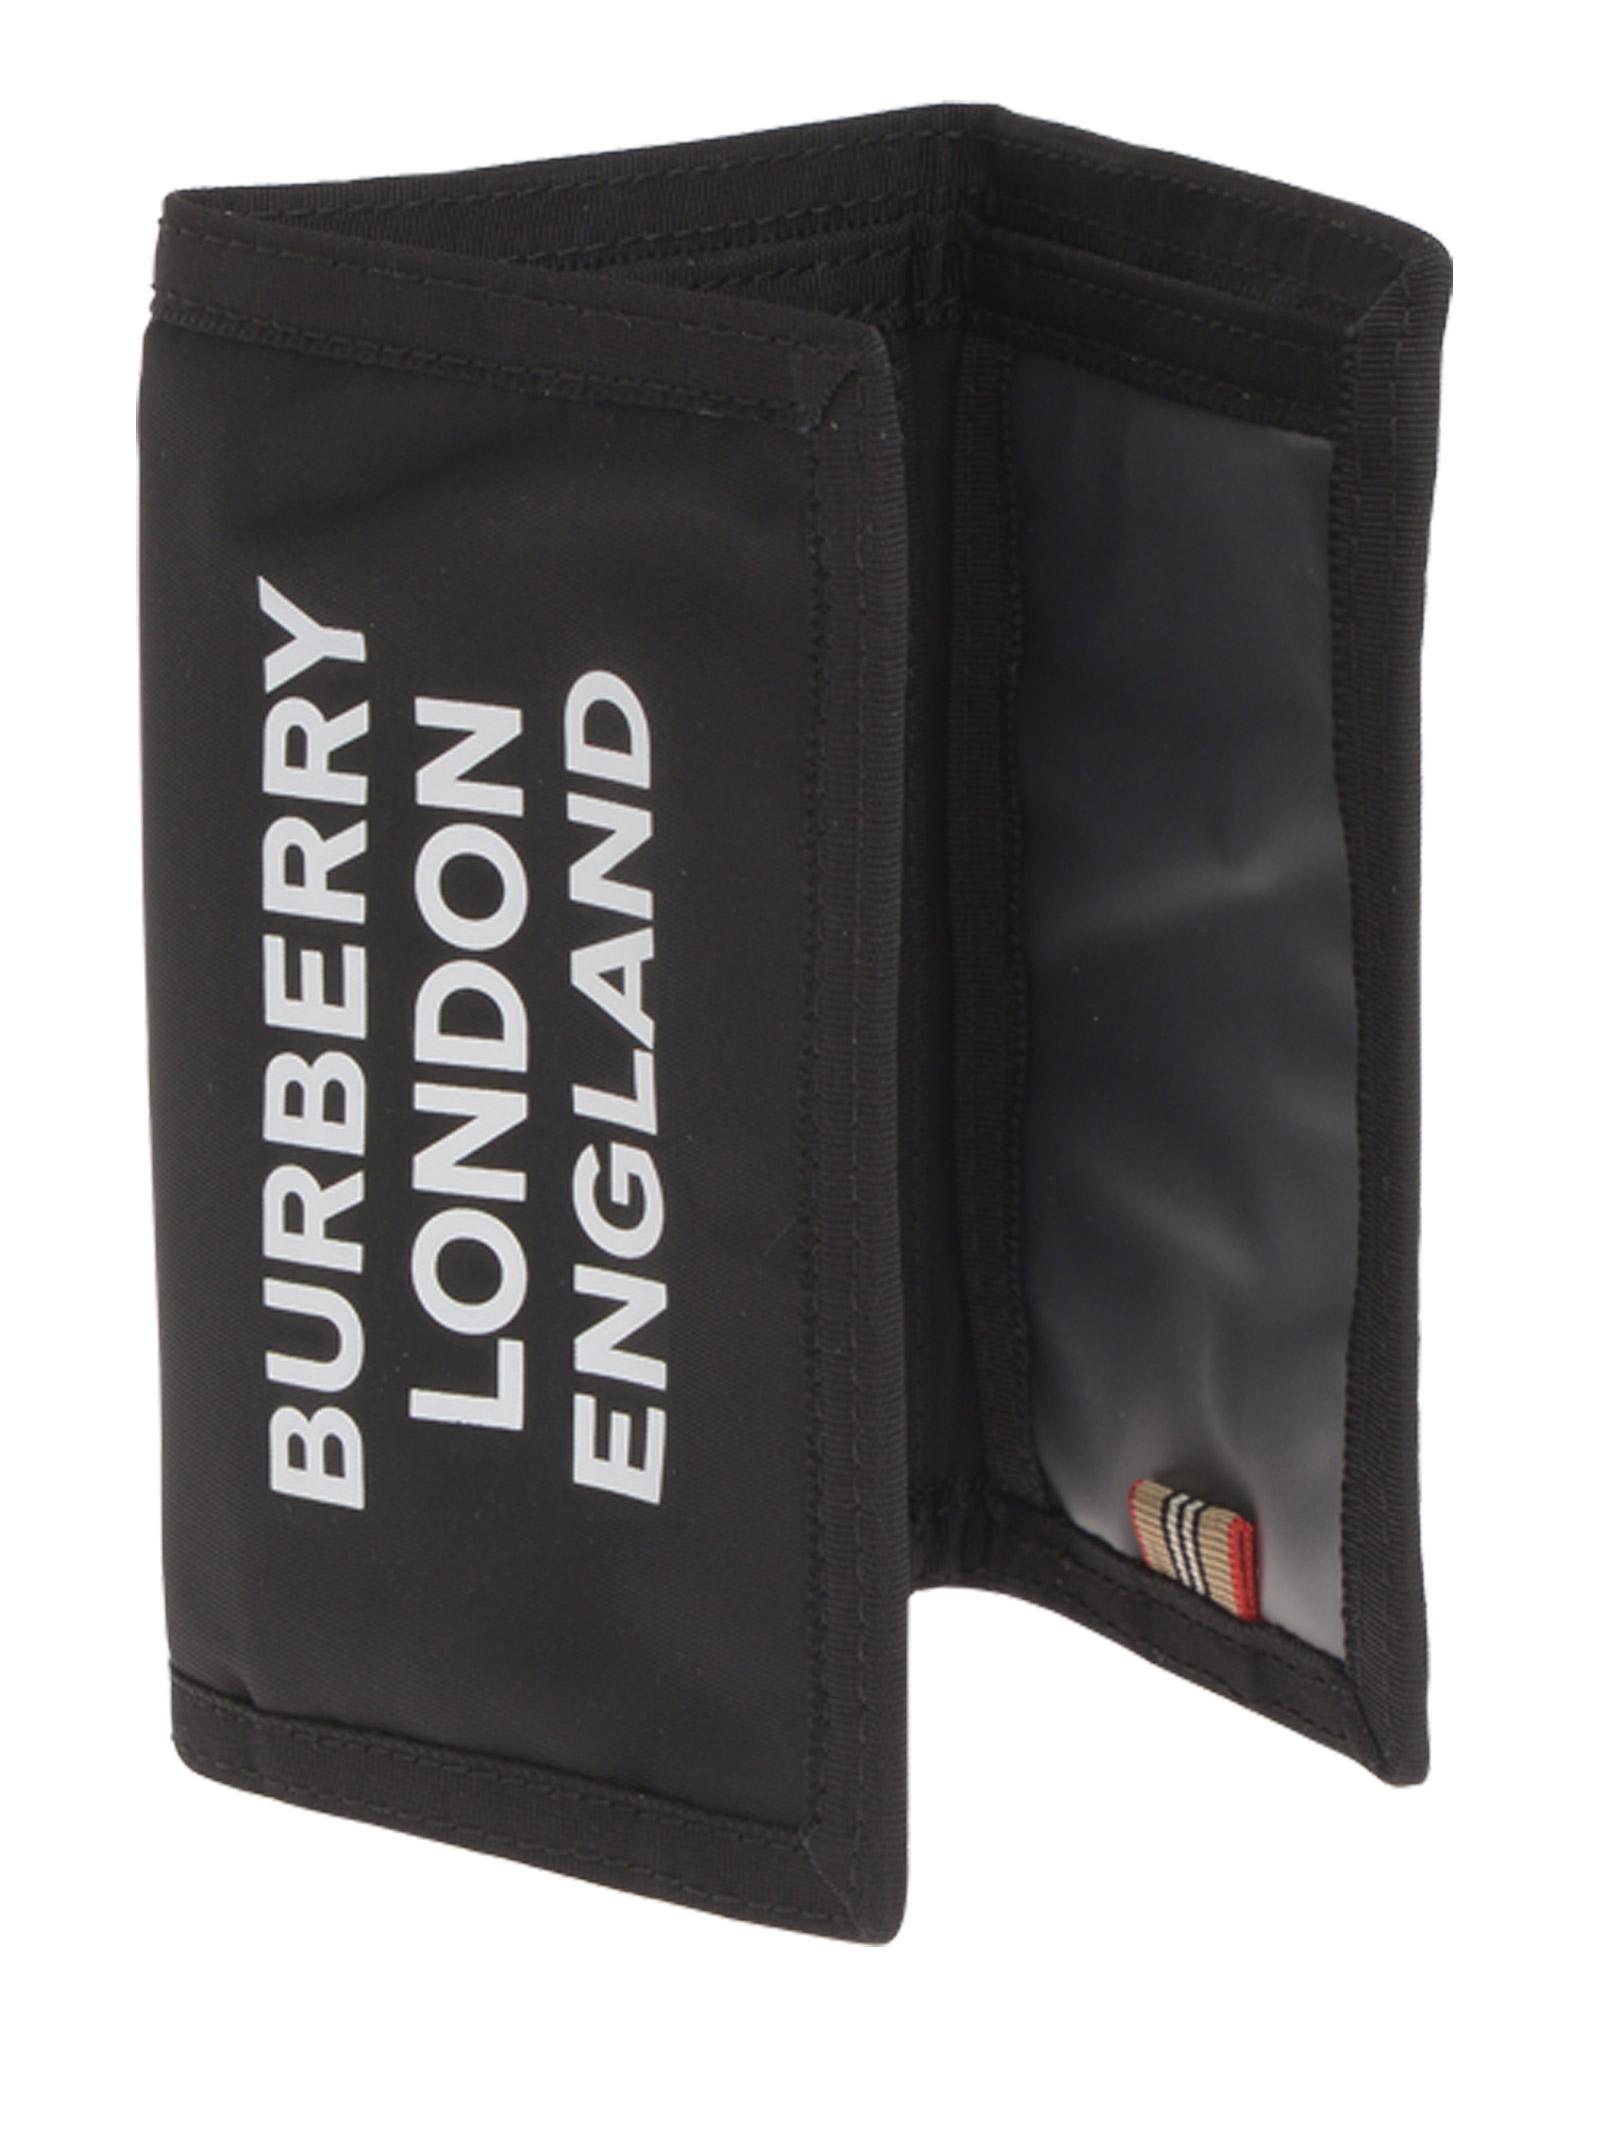 burberry london england wallet